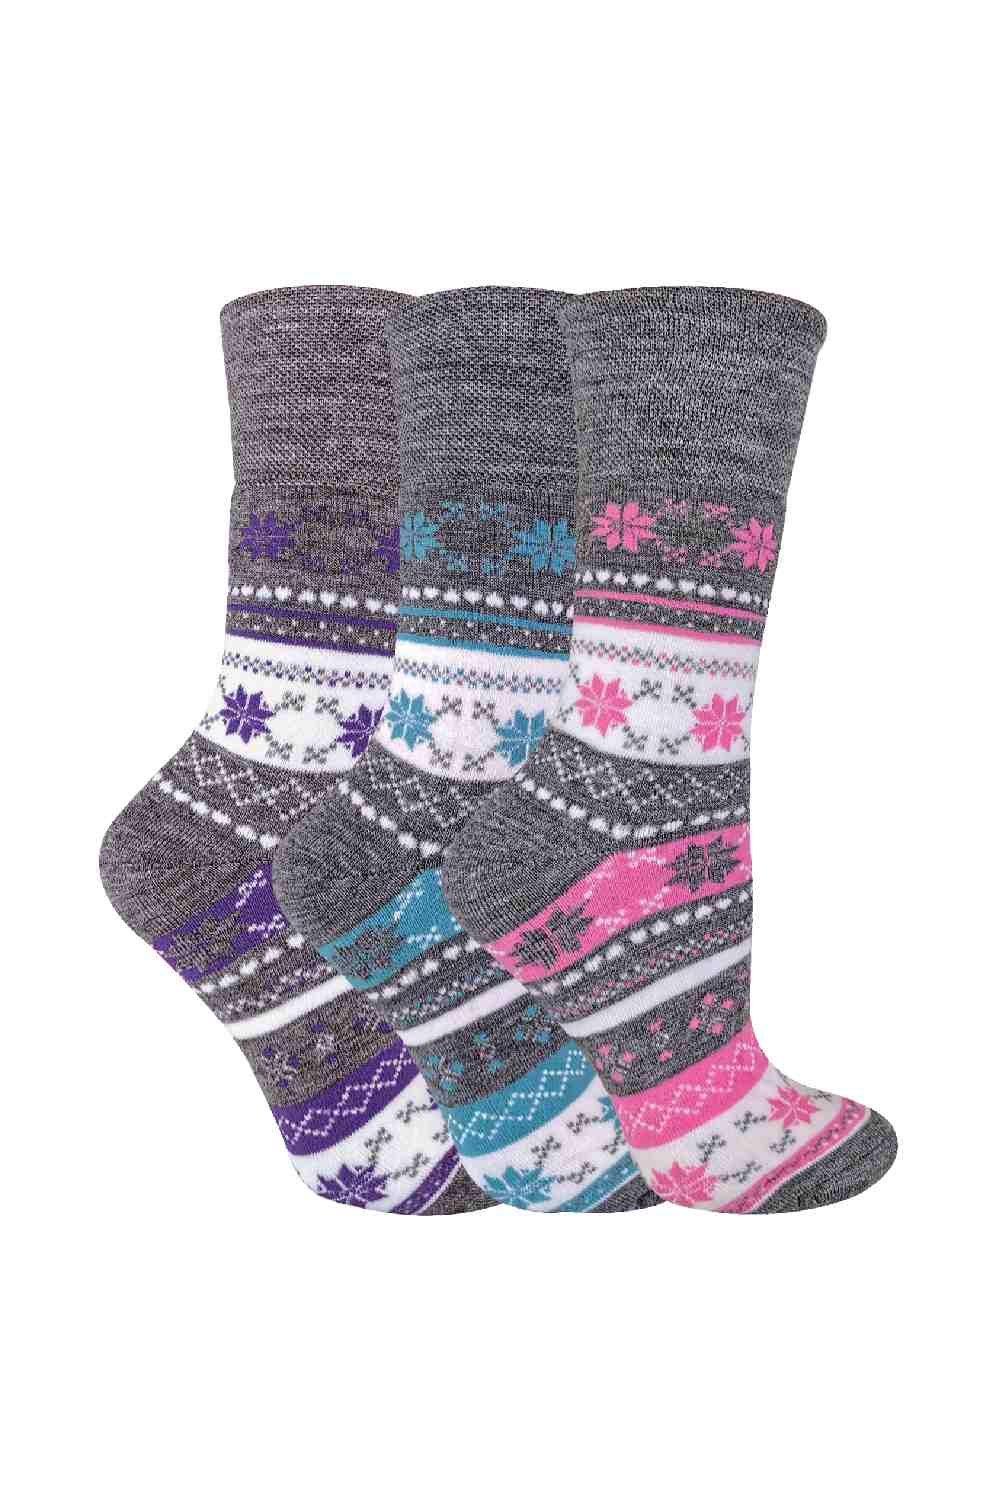 3 Pairs Thick Warm Fairisle Pattern Thermal Non-Elastic Top Socks